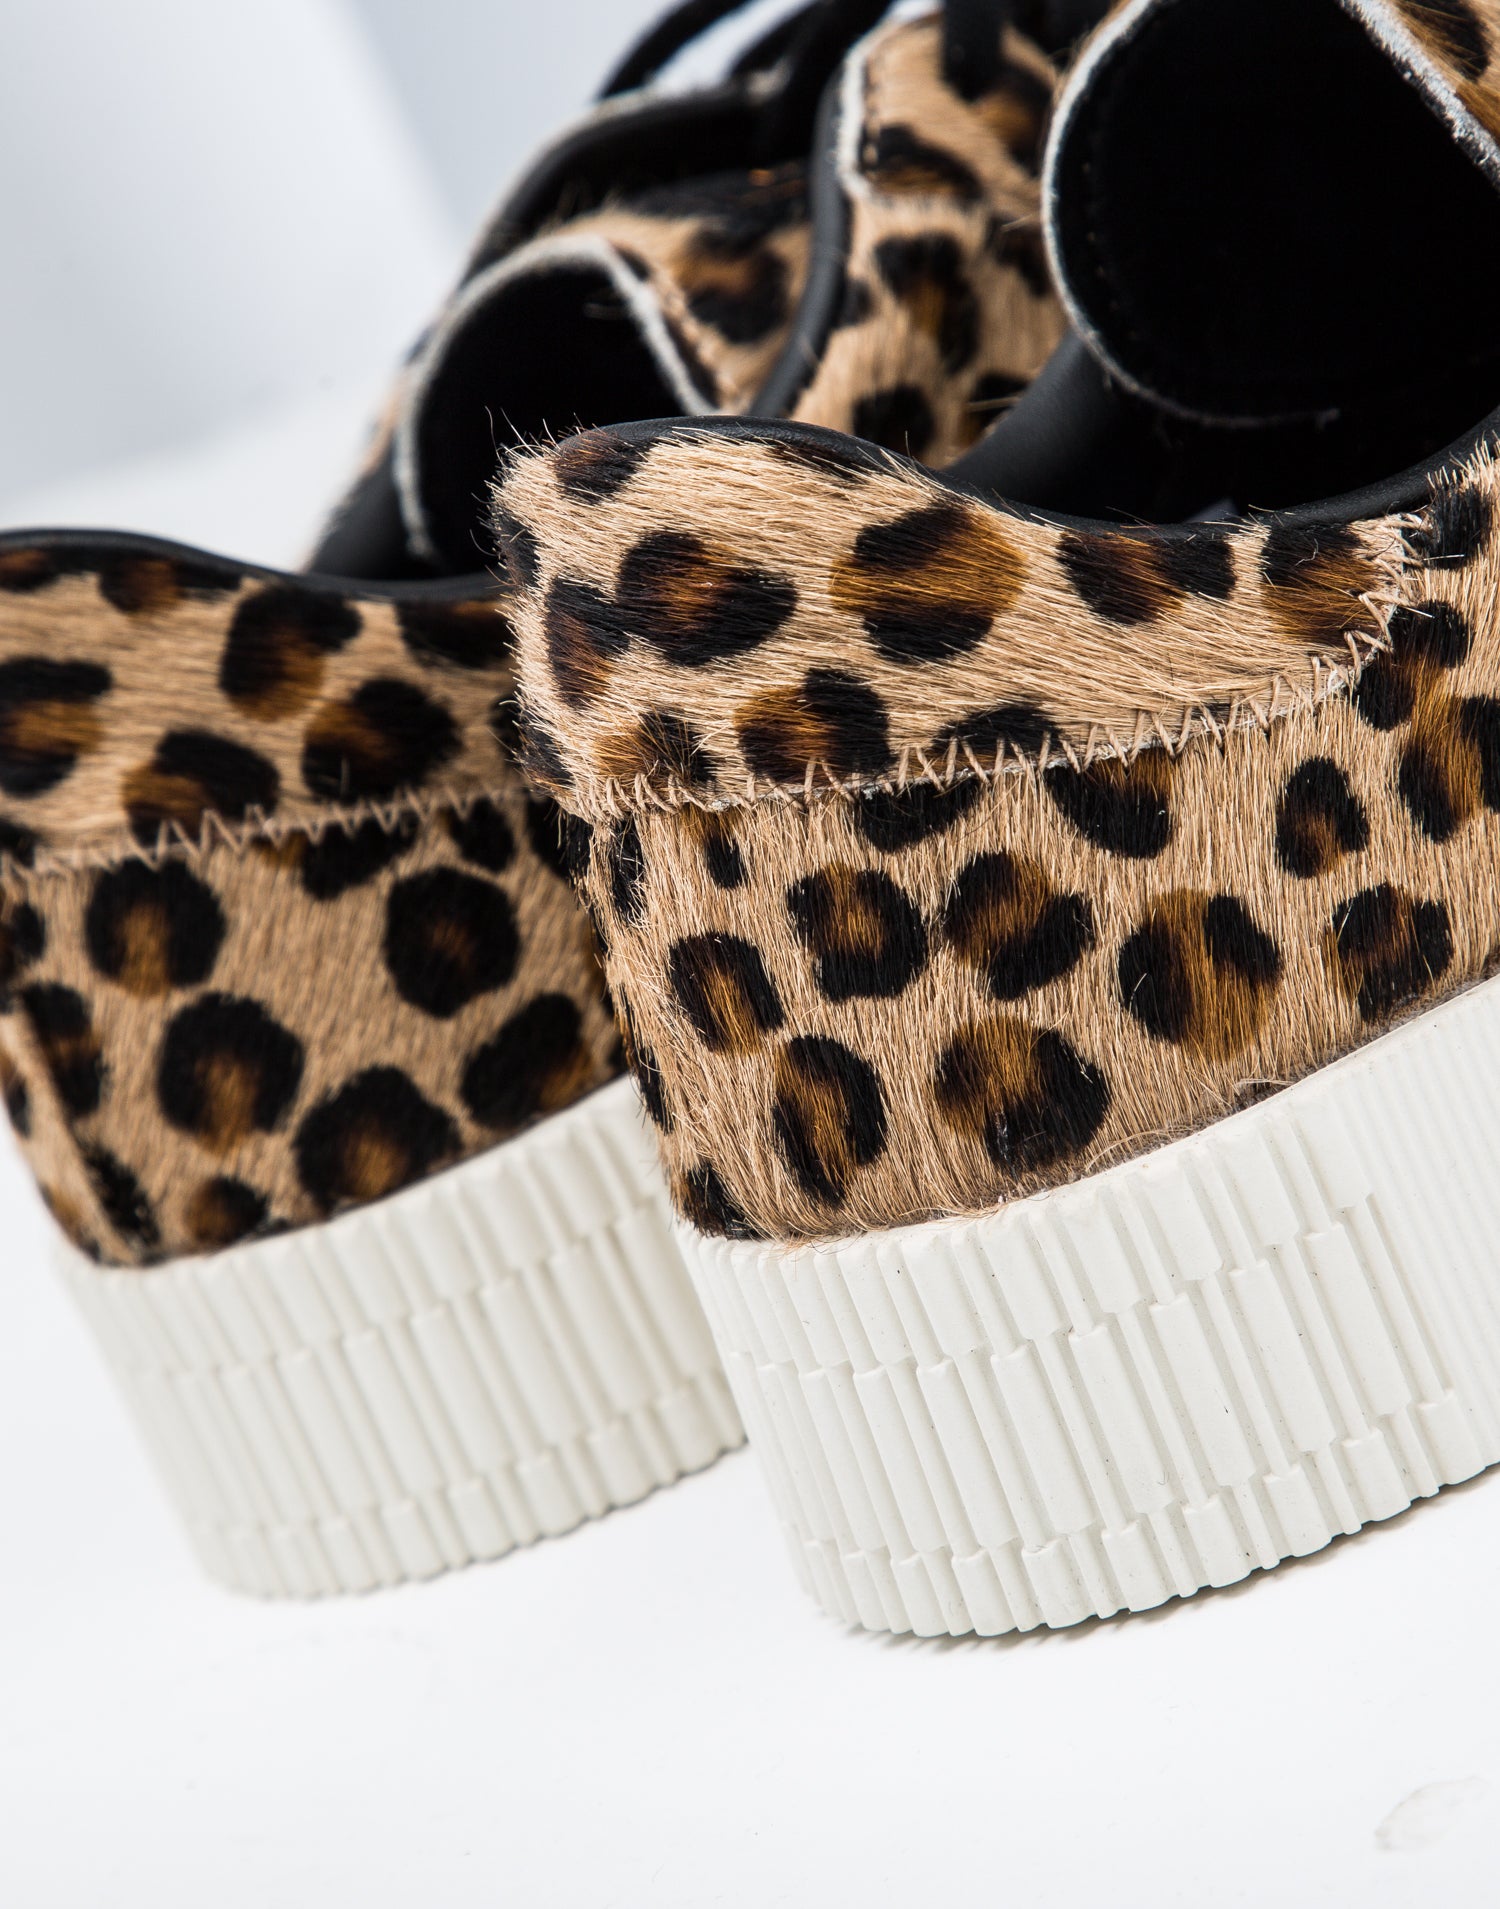 adidas sambarose leopard